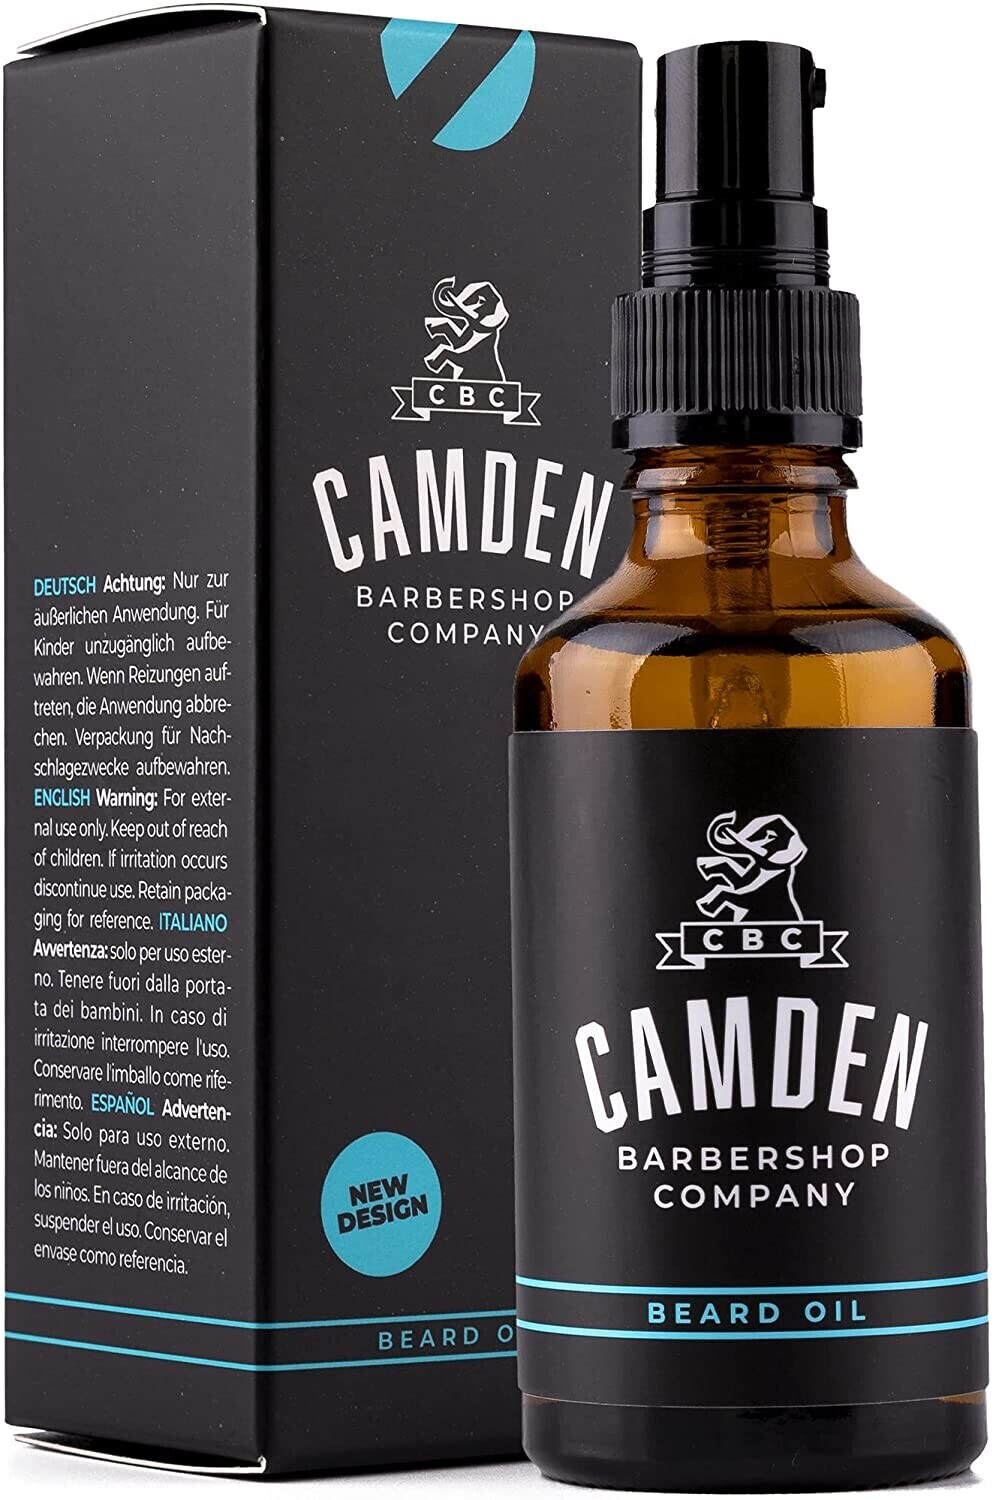 Camden Barbershop Company Original 9,99 bei Oil ab € Beard | (50ml) Preisvergleich